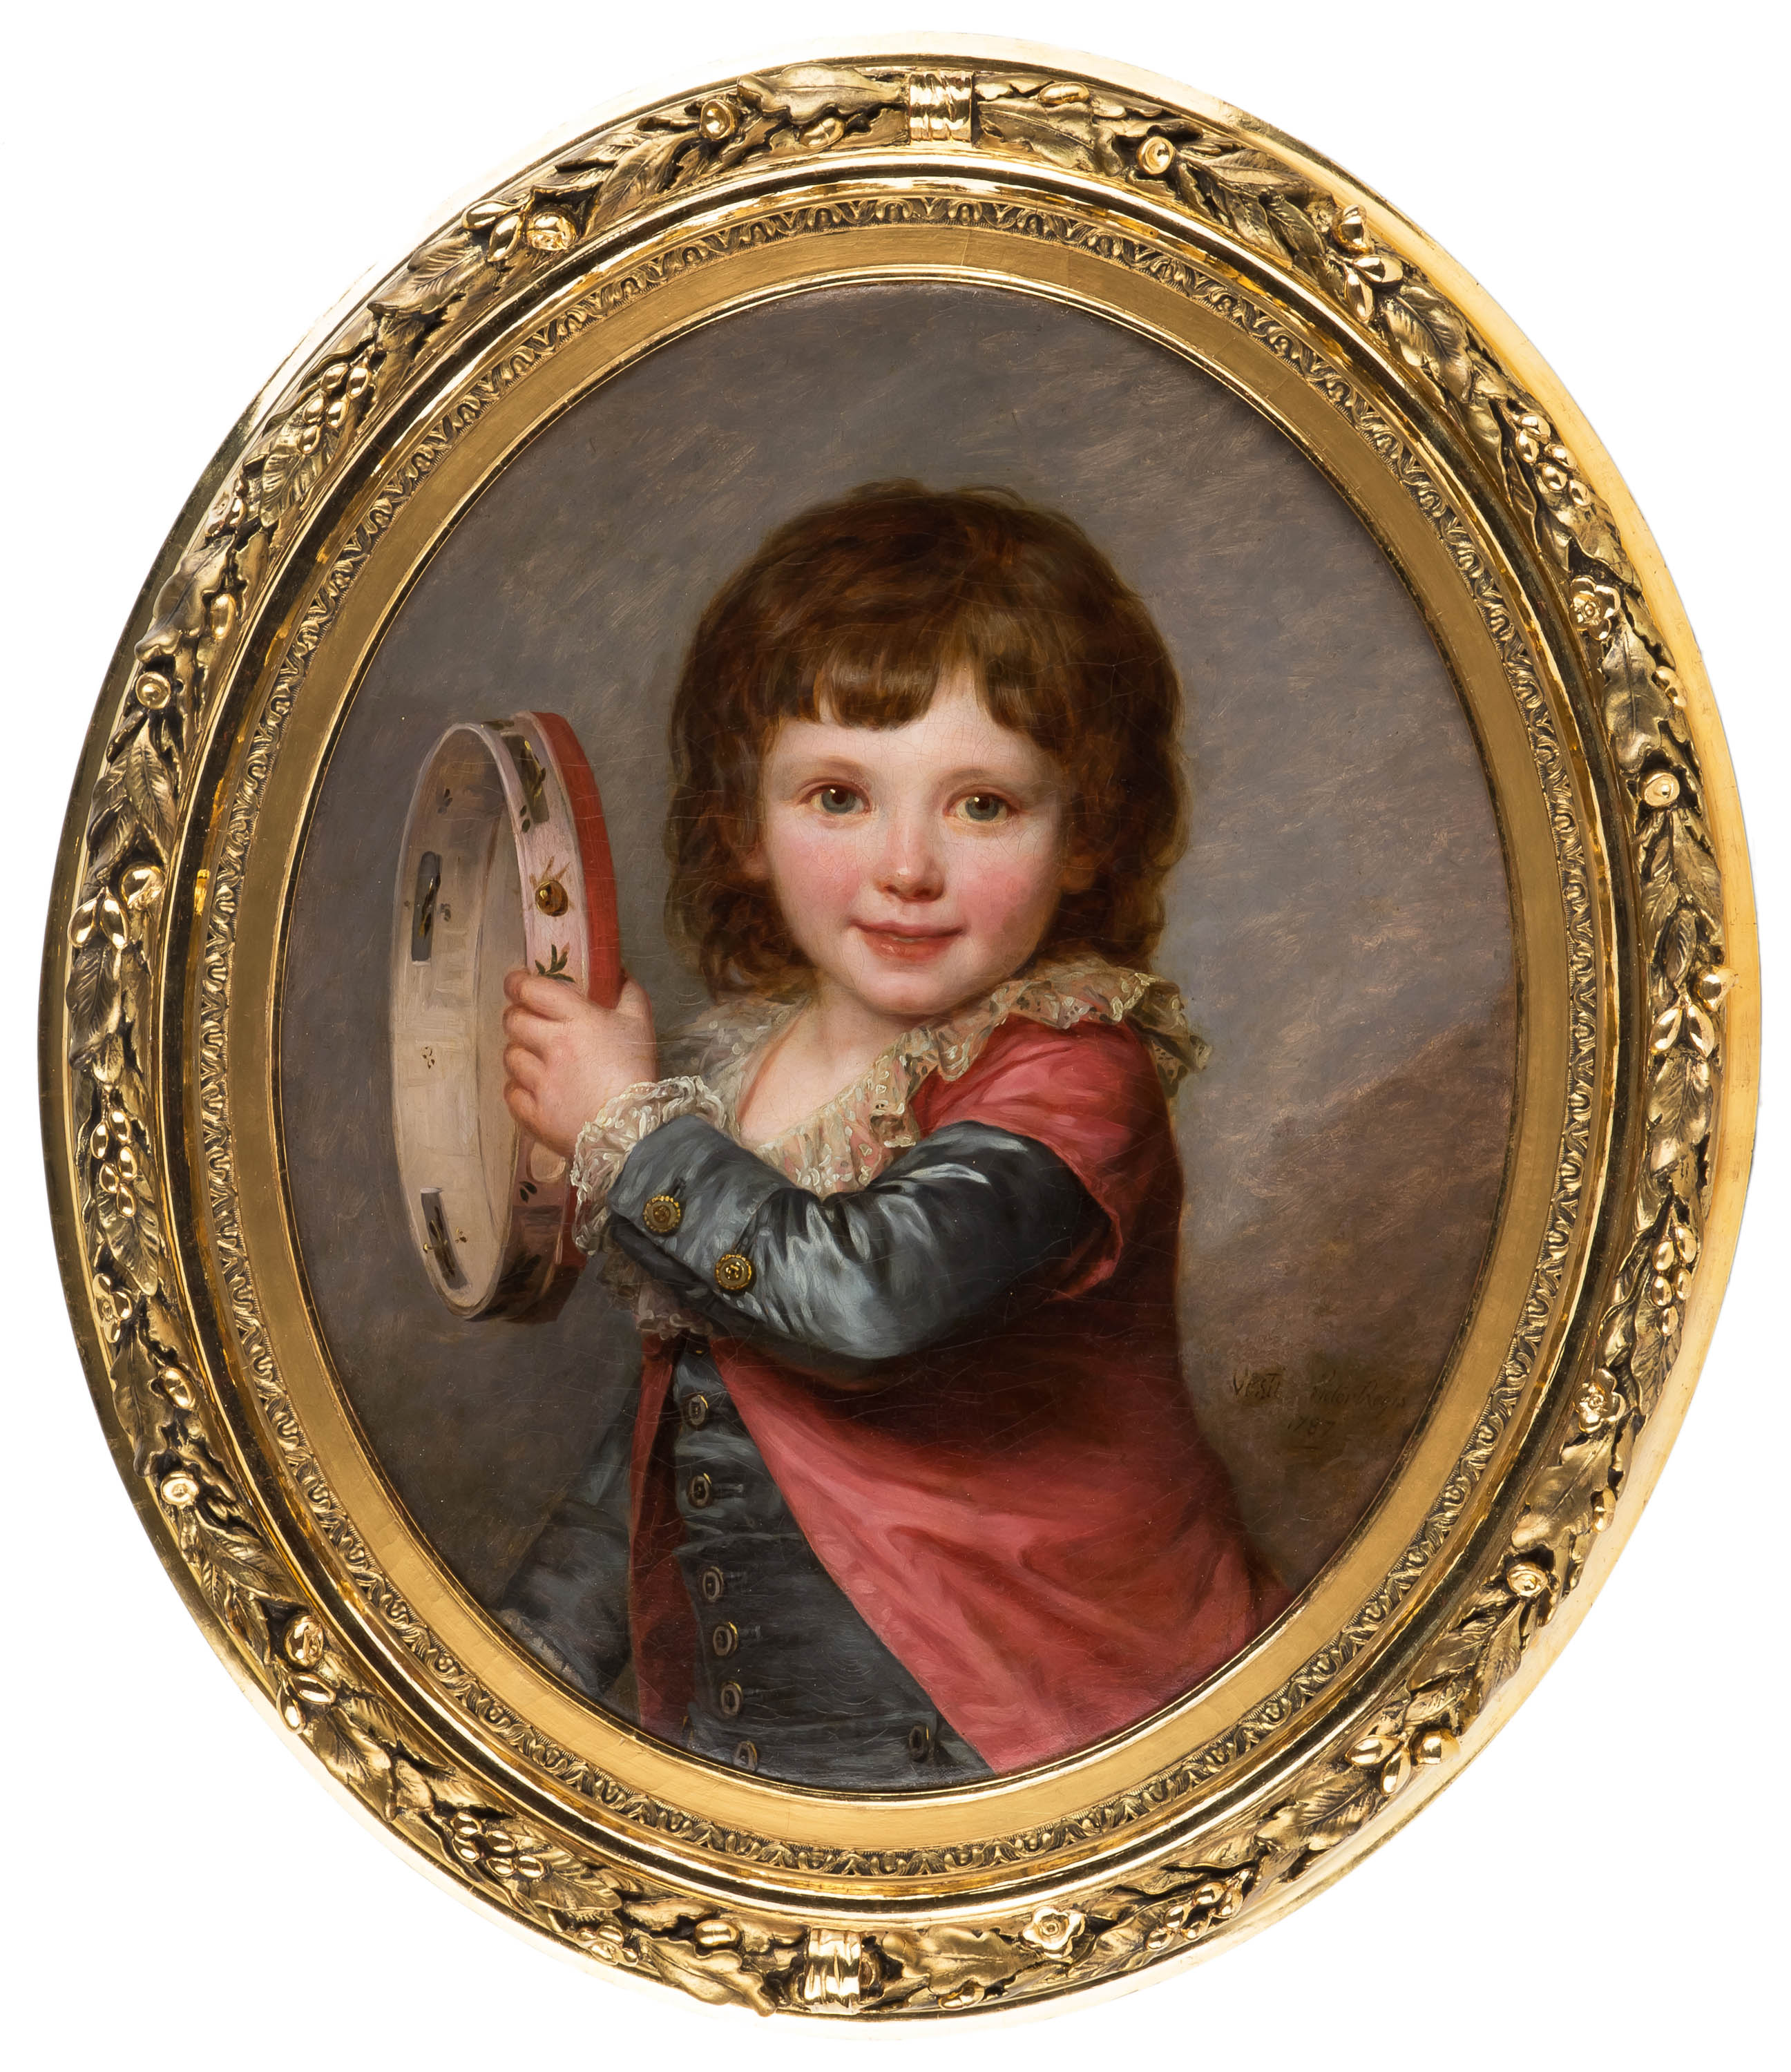 portret-chlopca-z-tamburynem-1787-r-mn-xviii-w-szkola-francuska-972515